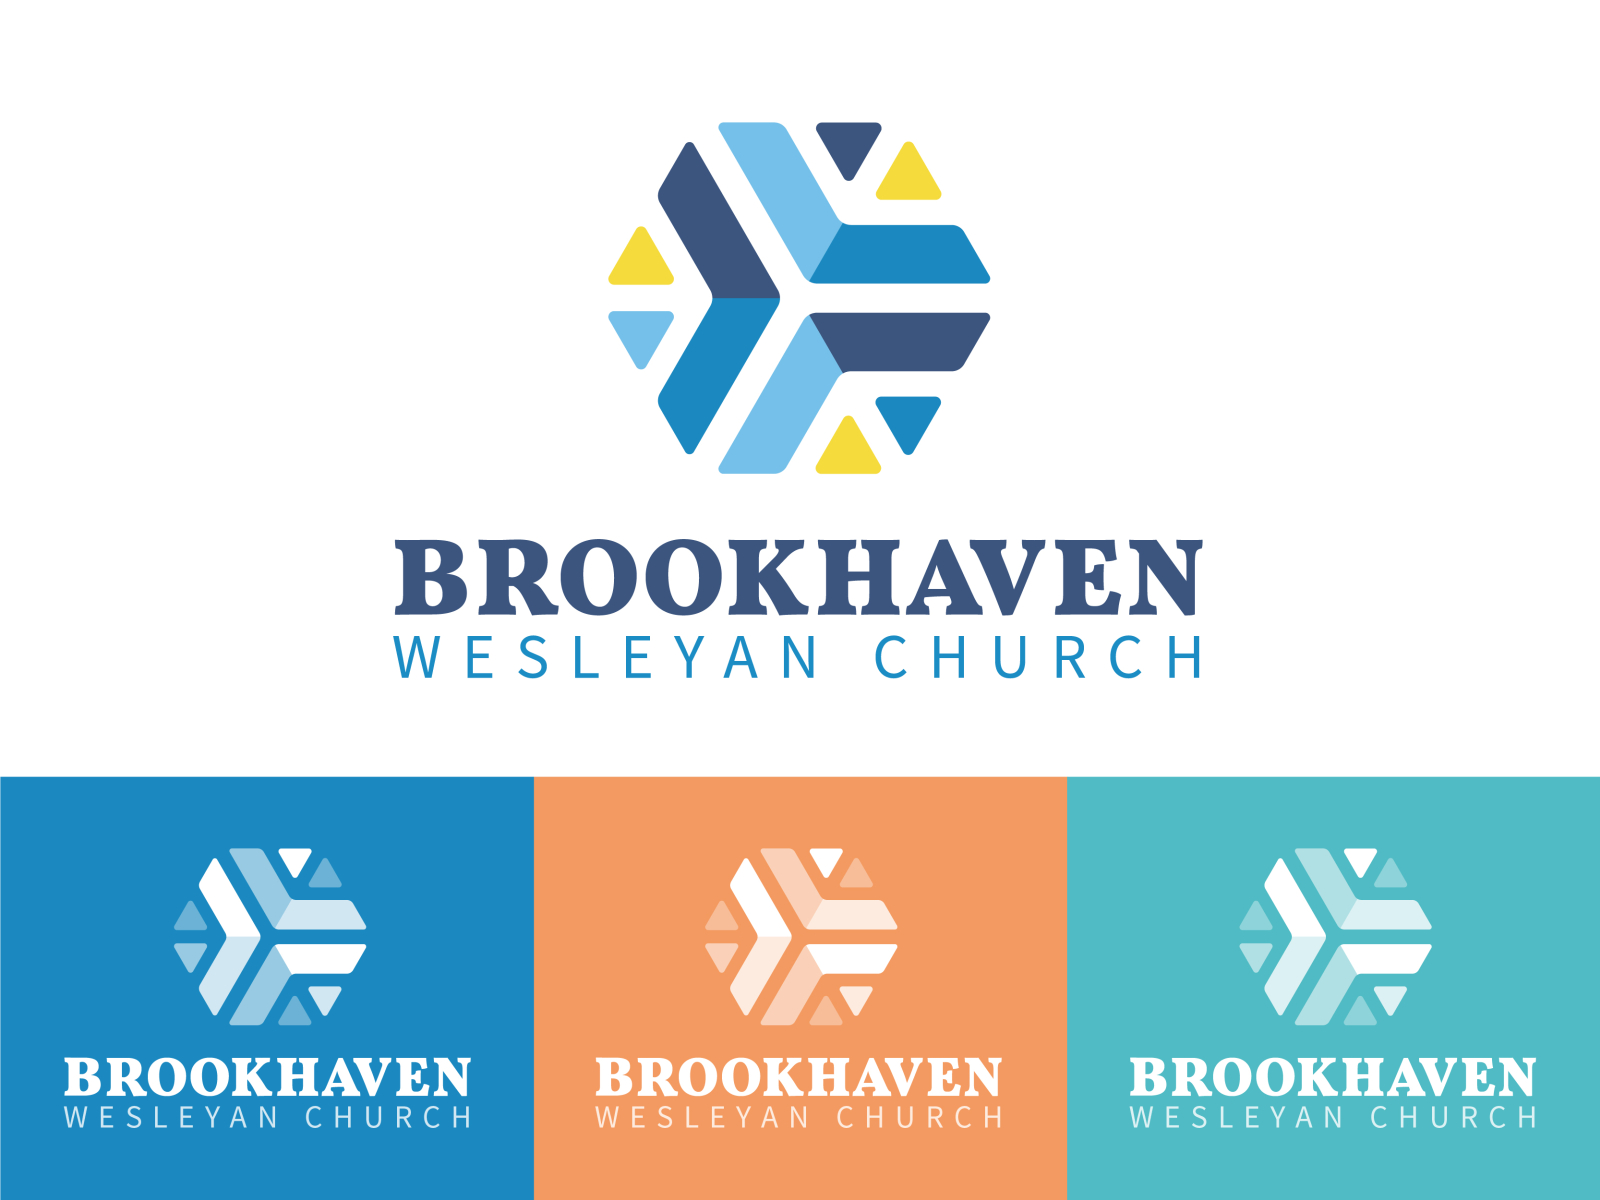 Brookhaven, Logopedia